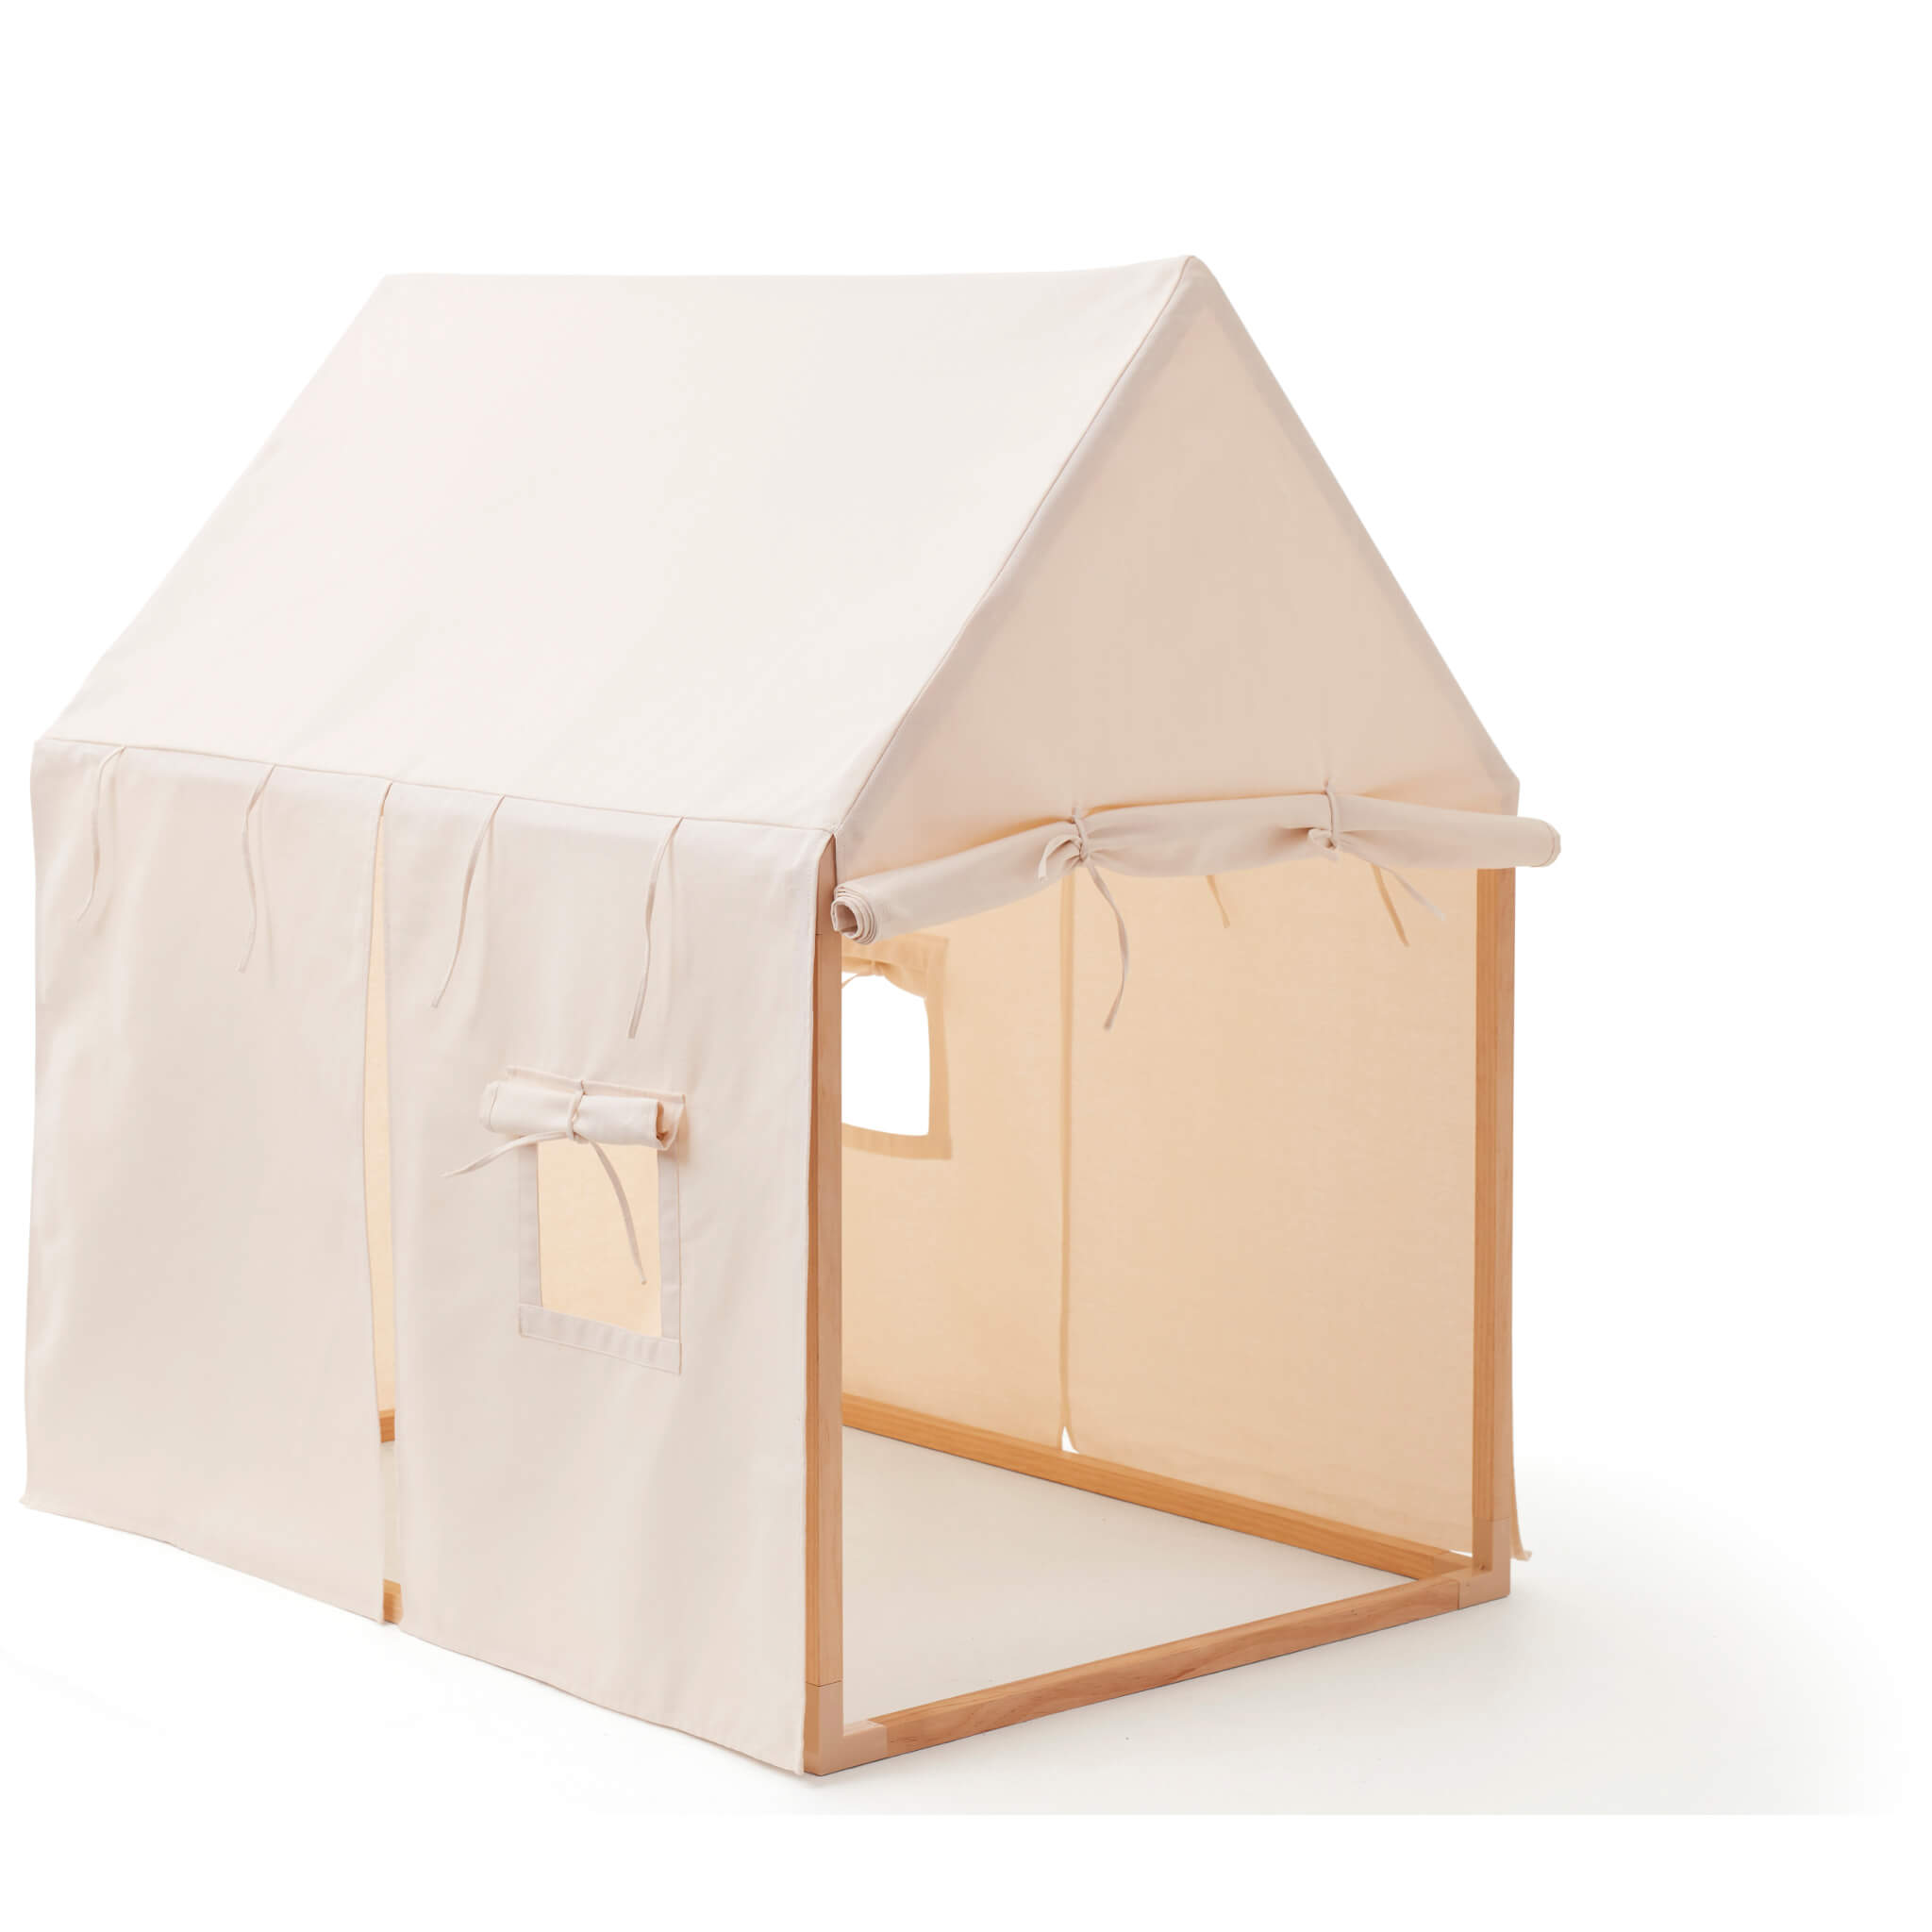 Kids Concept Playhouse Tent